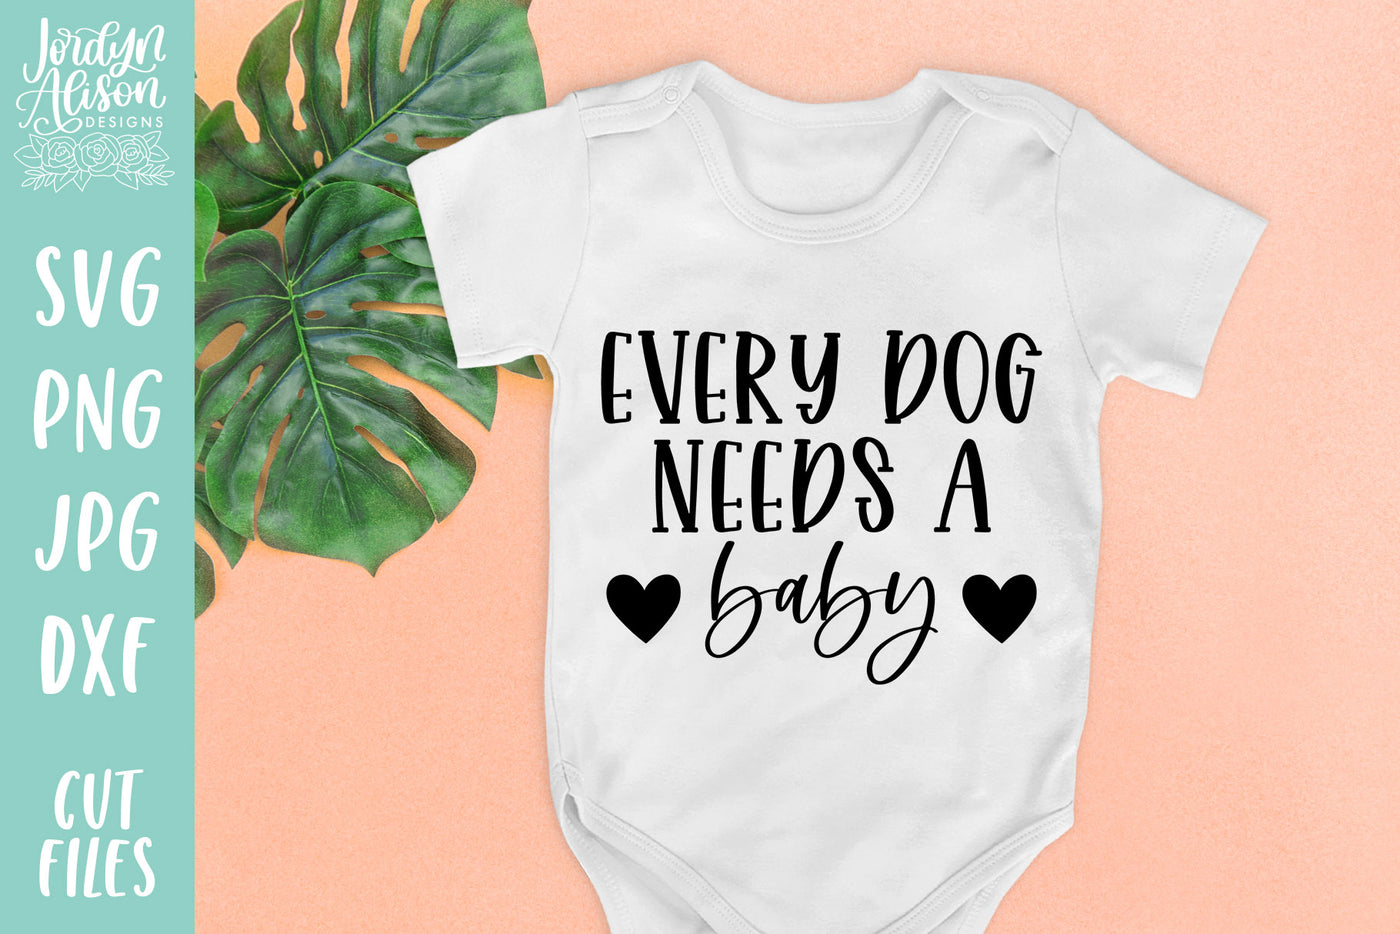 Every Dog Needs a Baby SVG